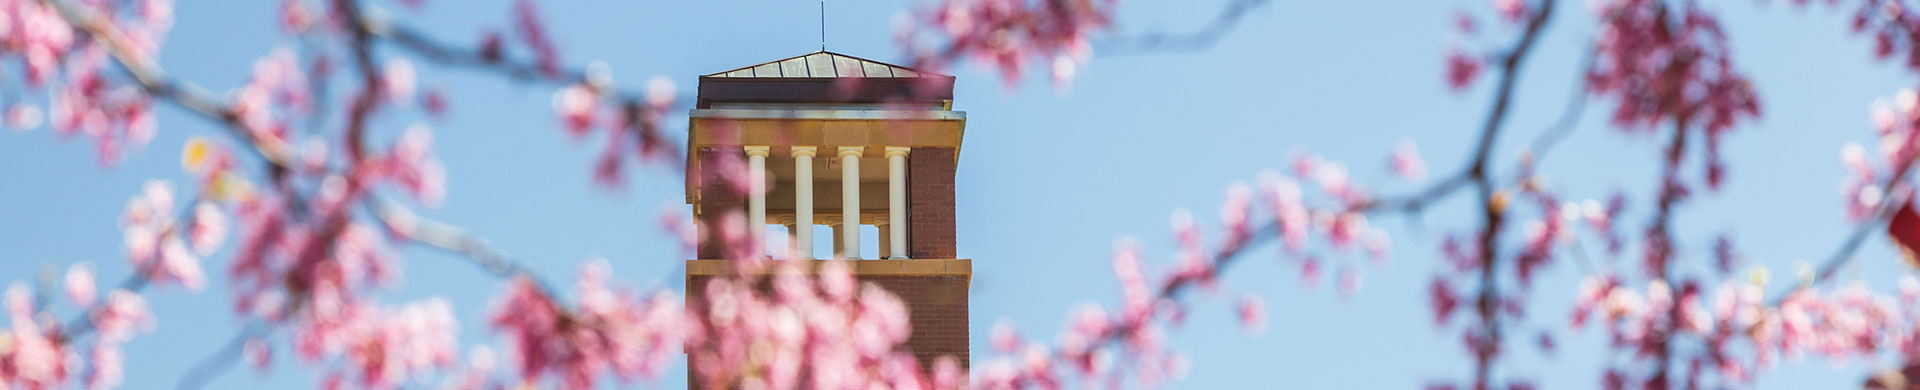 Pink Blossoms and Clock Tower at SUU